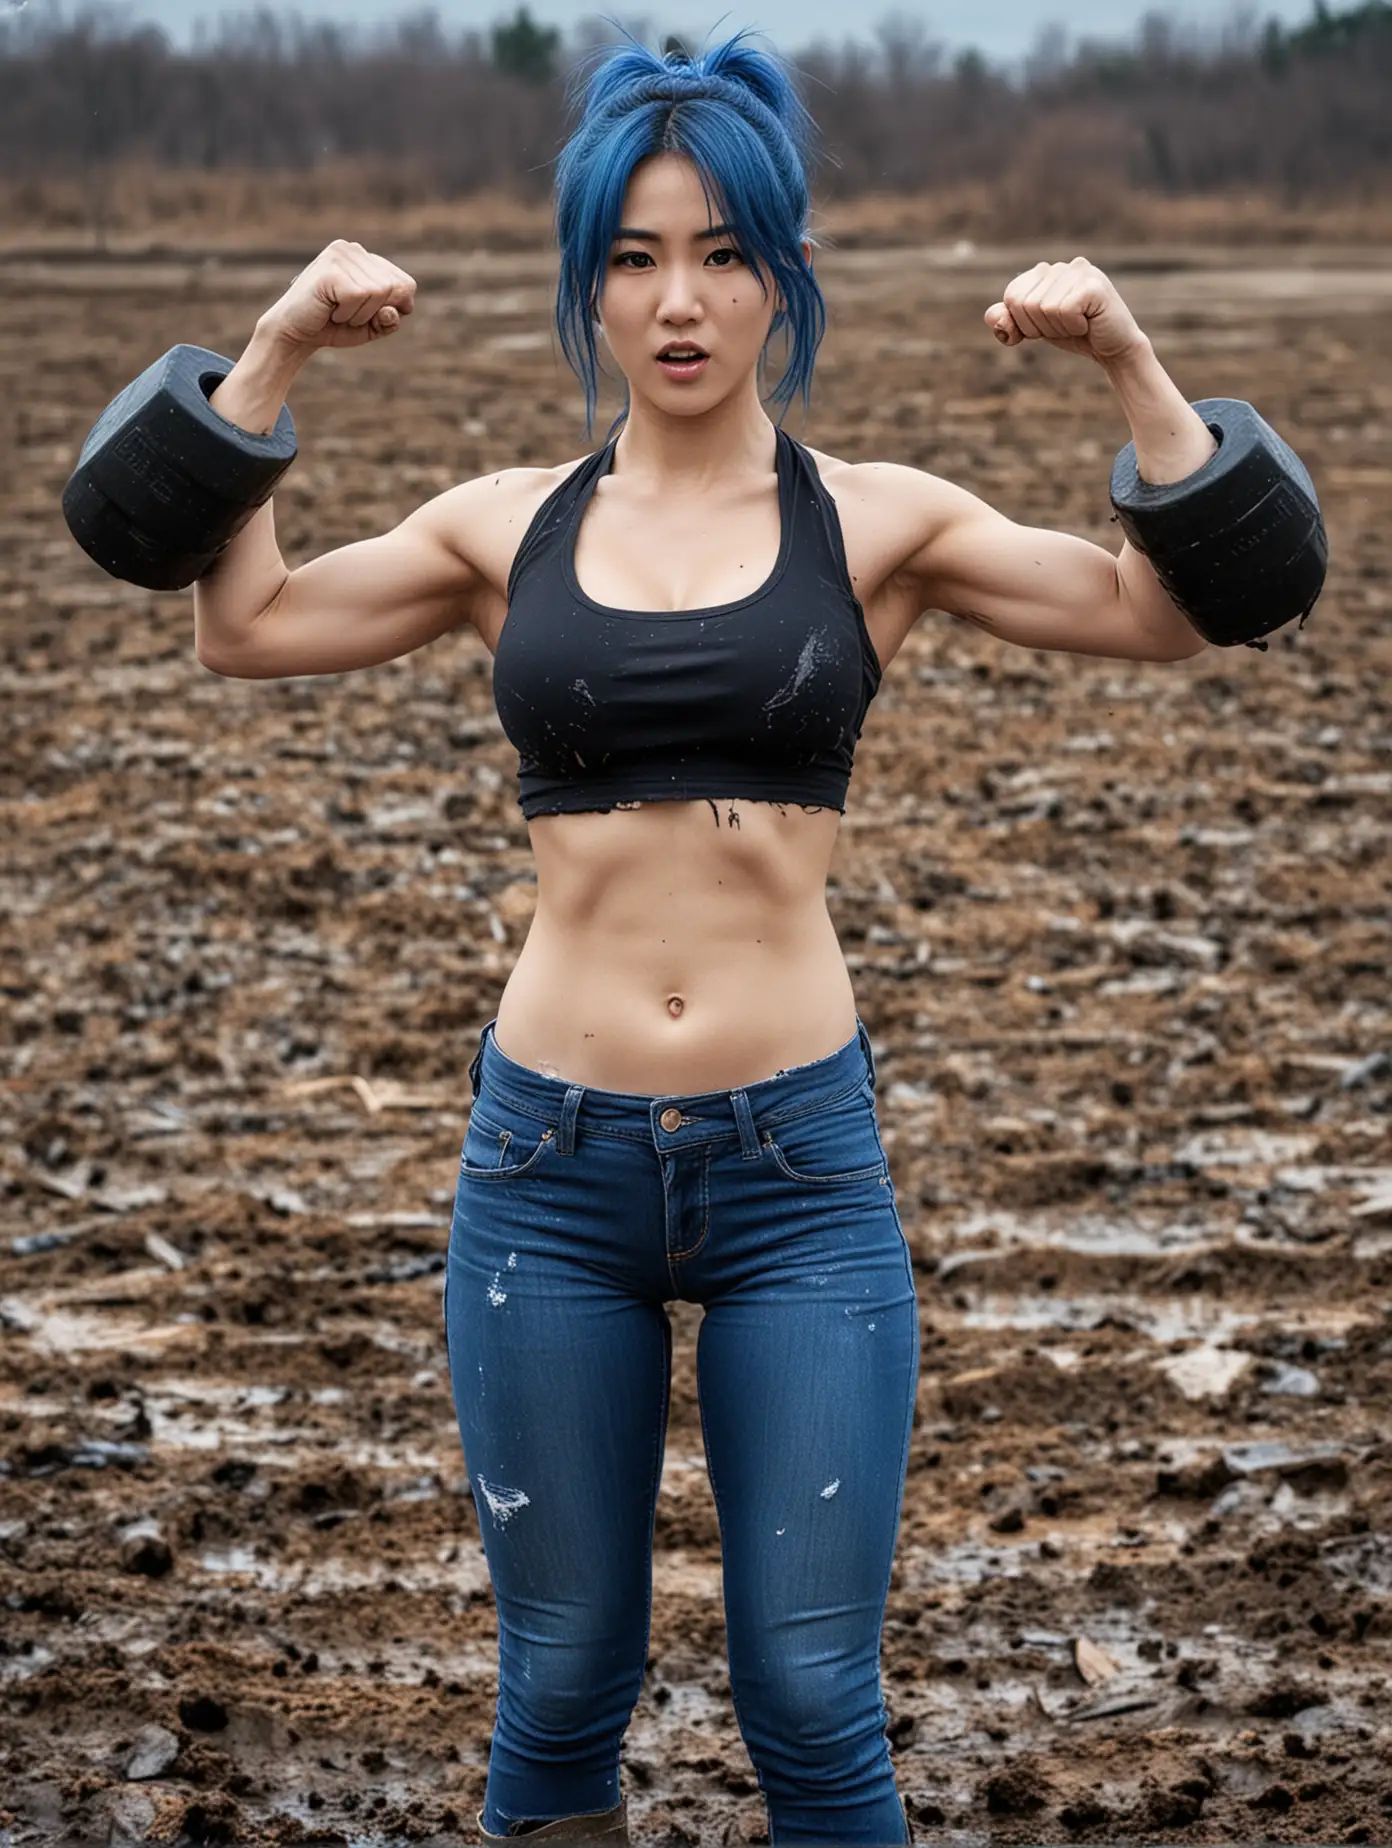 Muscular Korean Woman with Blue Hair Wrestling in Muddy Field